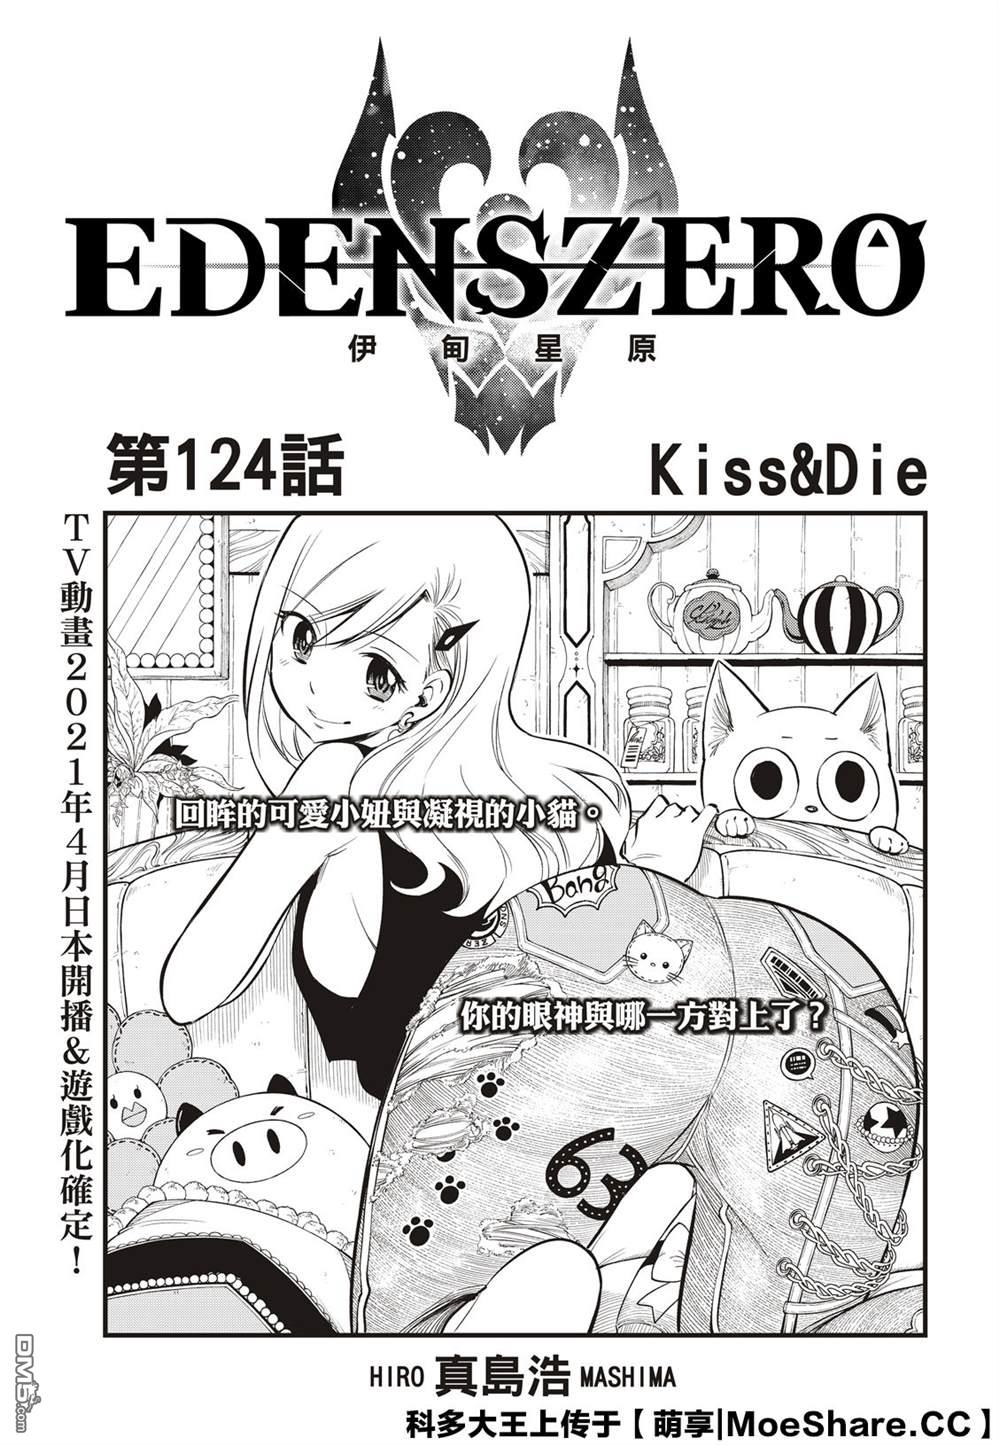 伊甸星原 EDEN'S ZERO - 第124话 Kiss&Die - 1